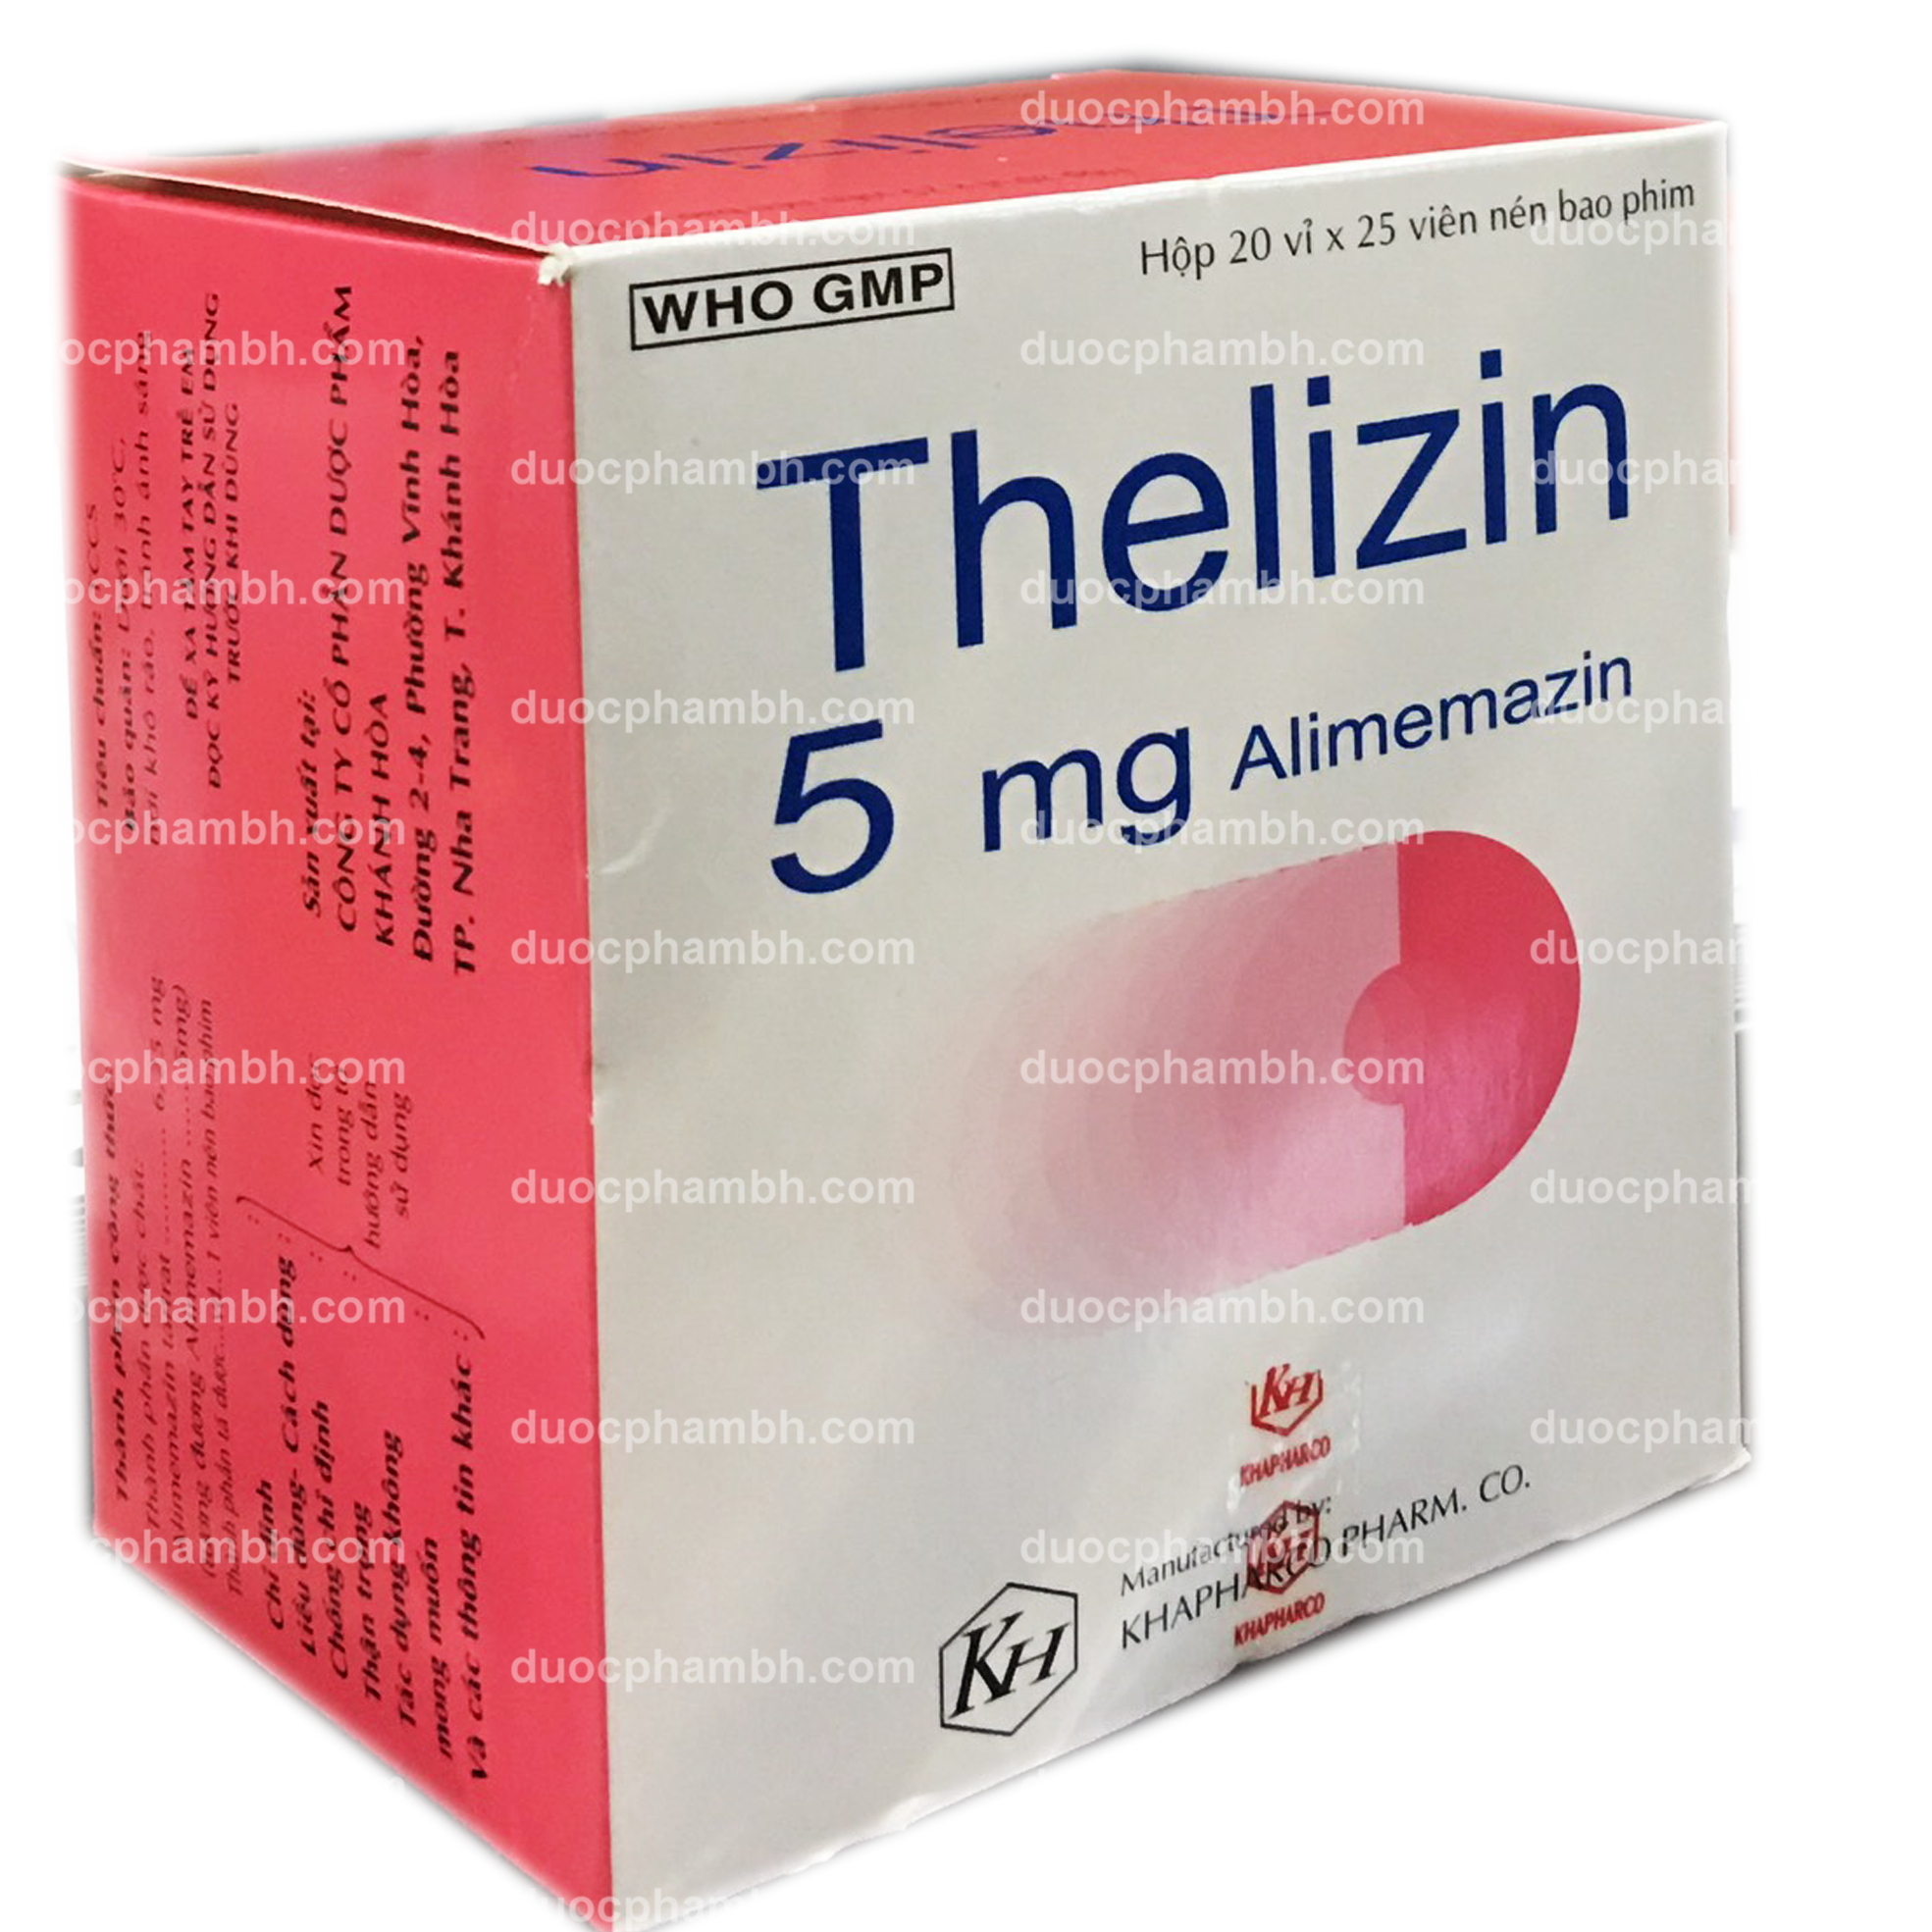 Thelizin (Alimemazin) 5mg Khapharco (H/500v)